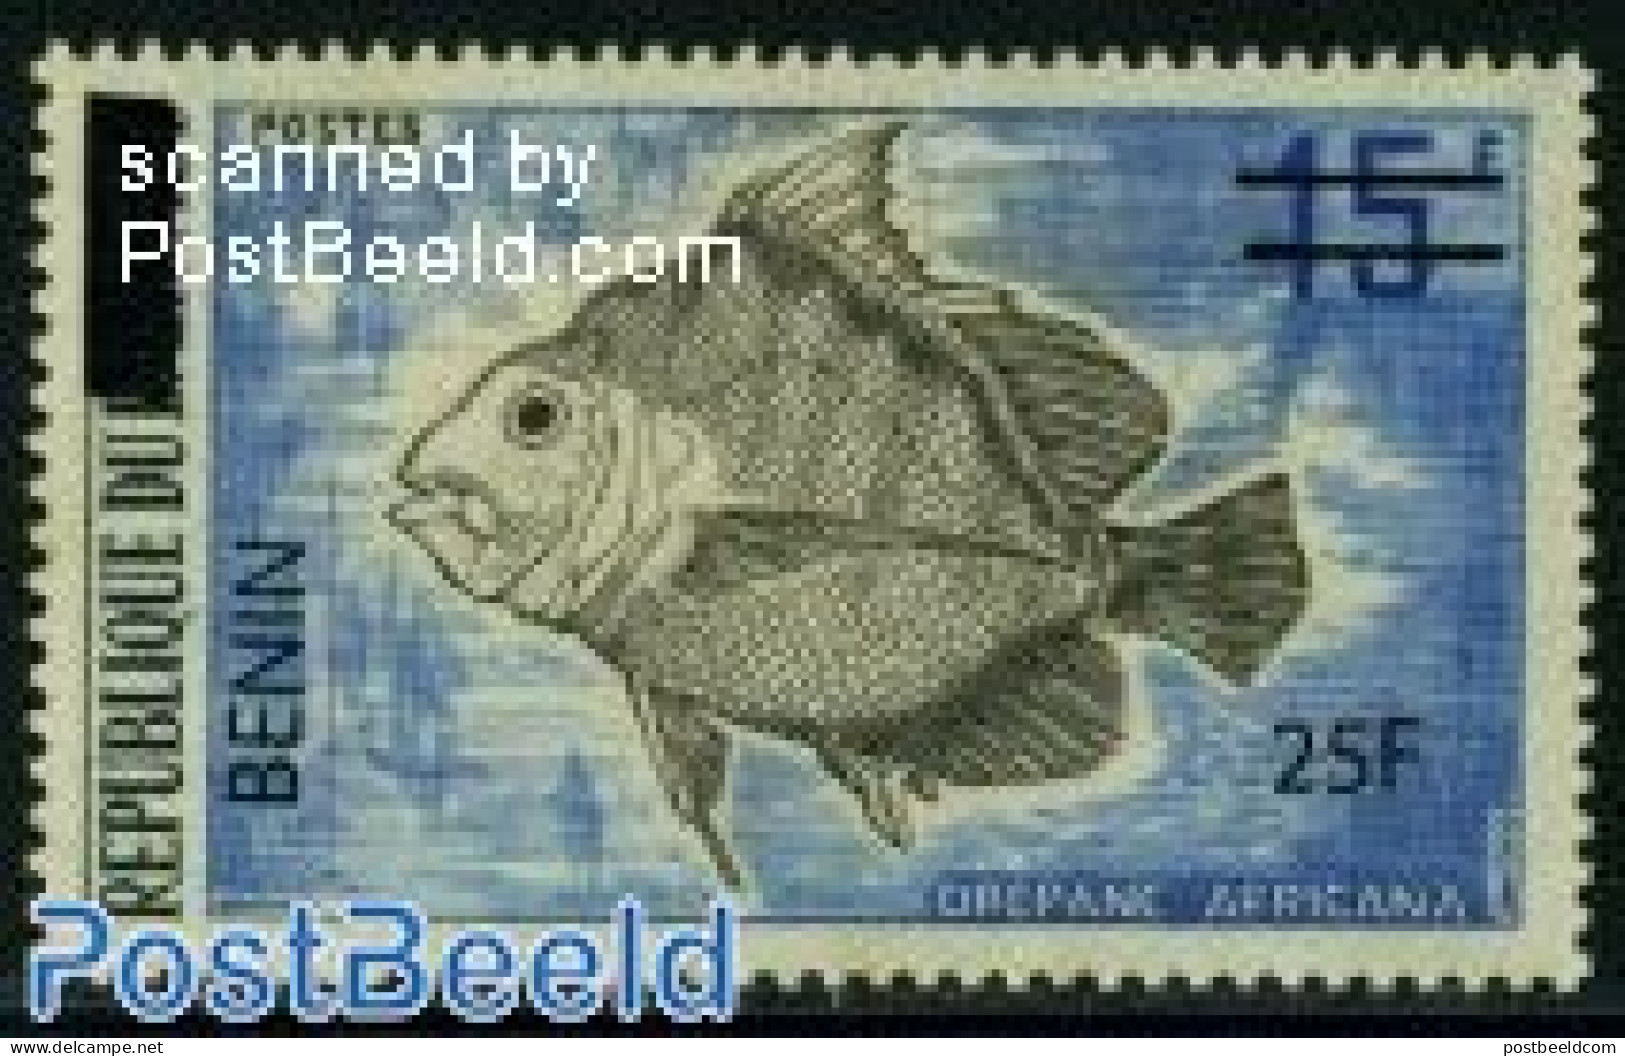 Benin 2008 Fish Overprint 1v, Mint NH, Nature - Fish - Unused Stamps